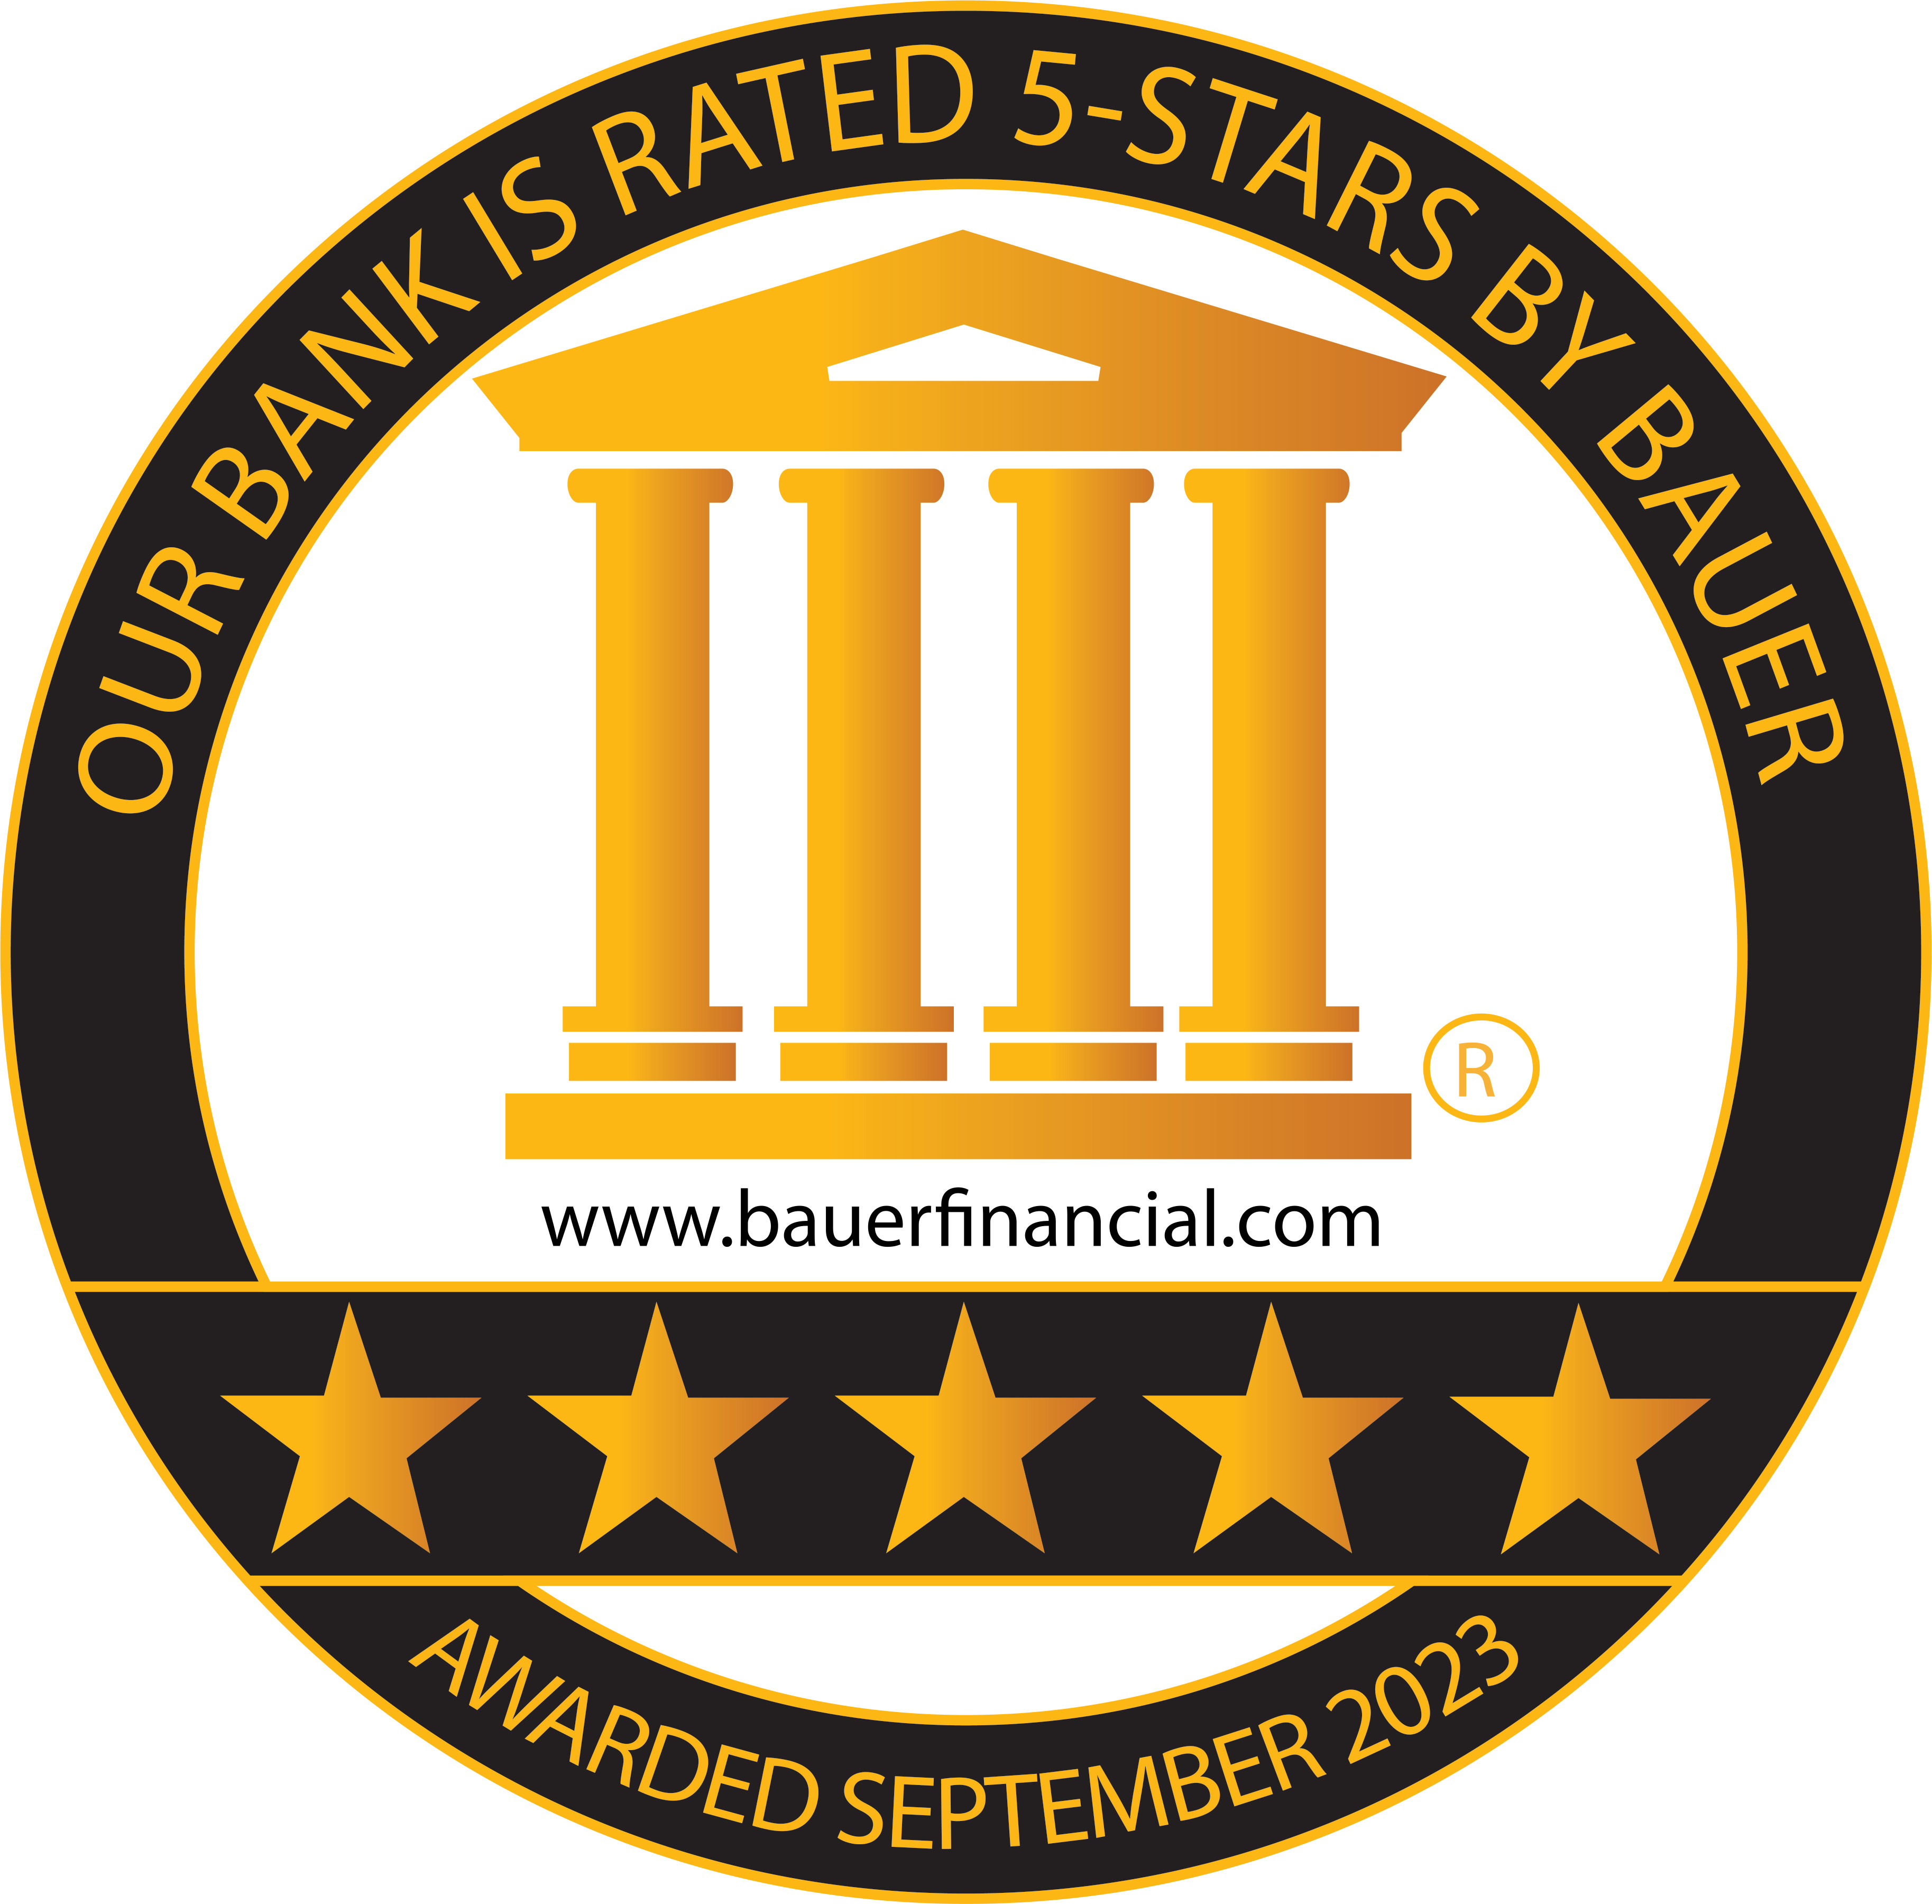 5 Star Bauer Financial Inc. rating logo